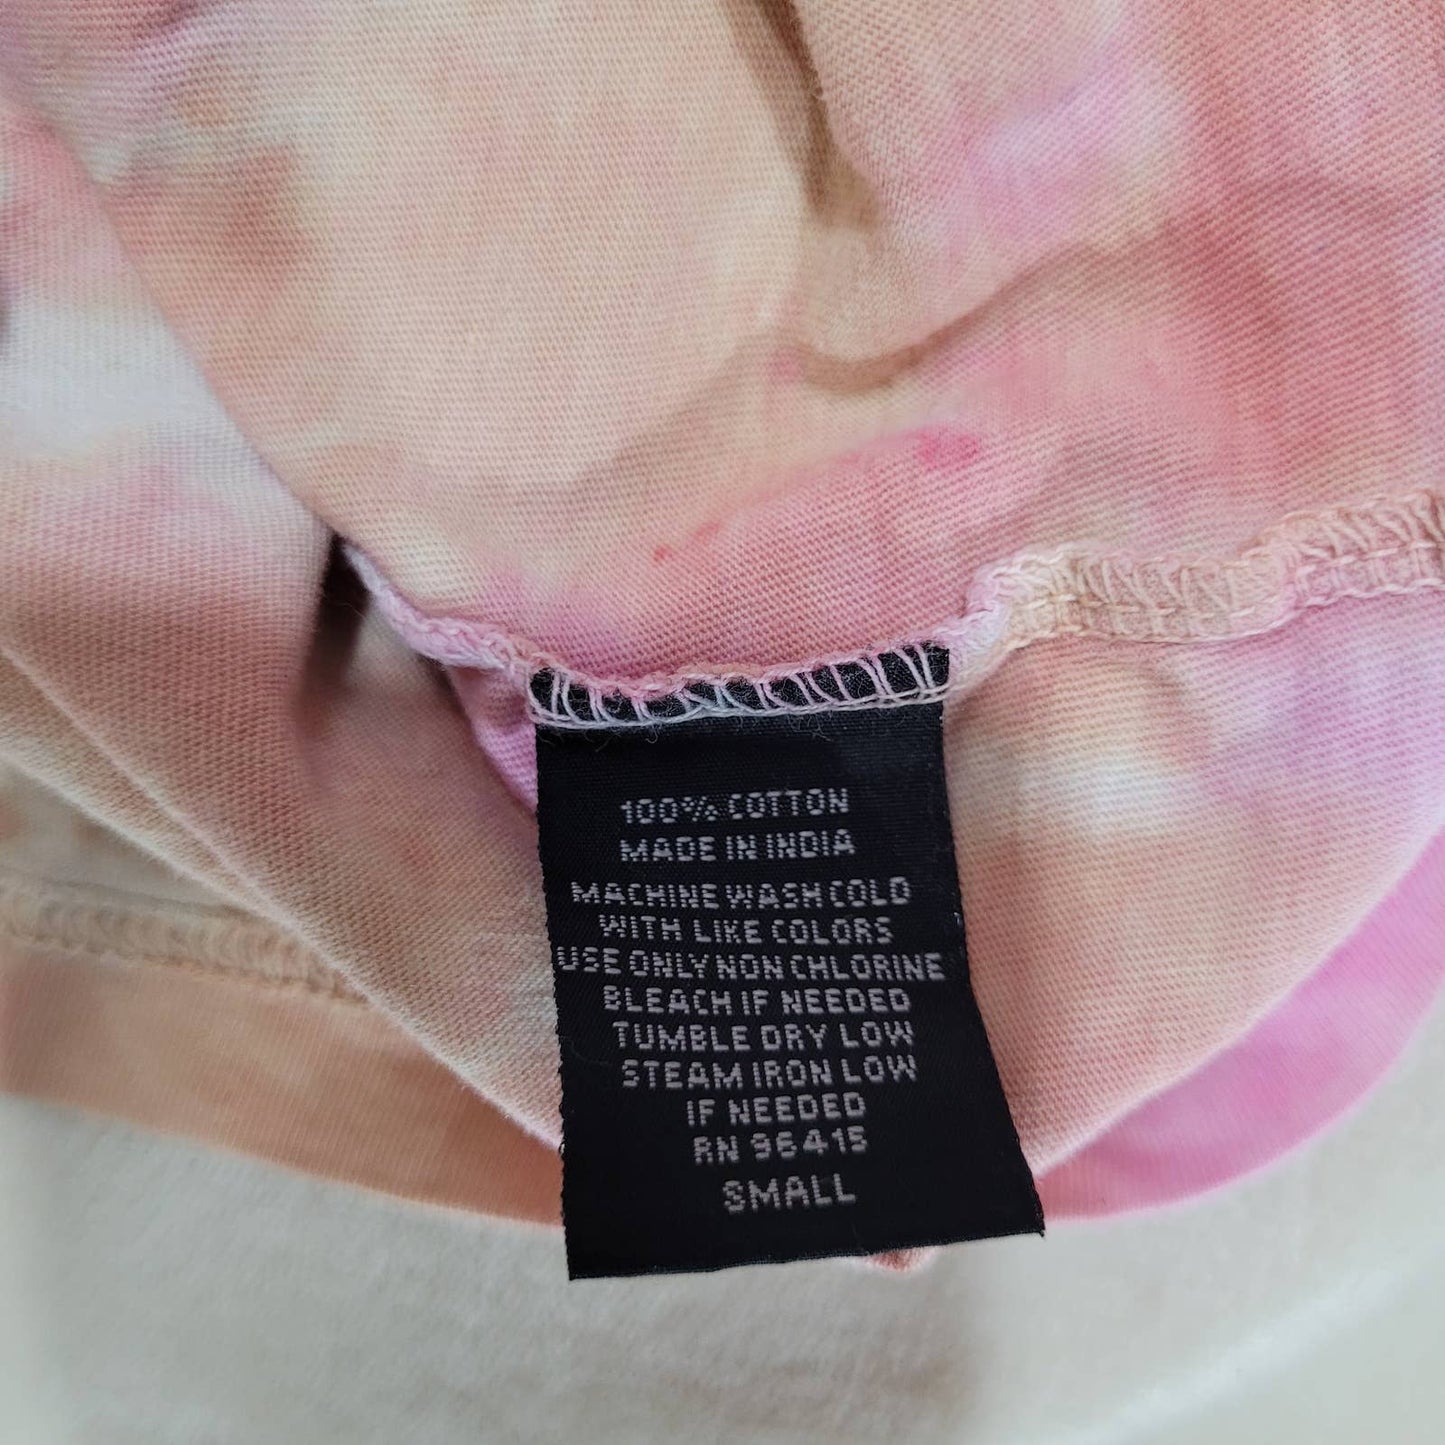 Super Massive Shop Pink and Orange Tie Dye Shirt - Men's Small, Women's Medium